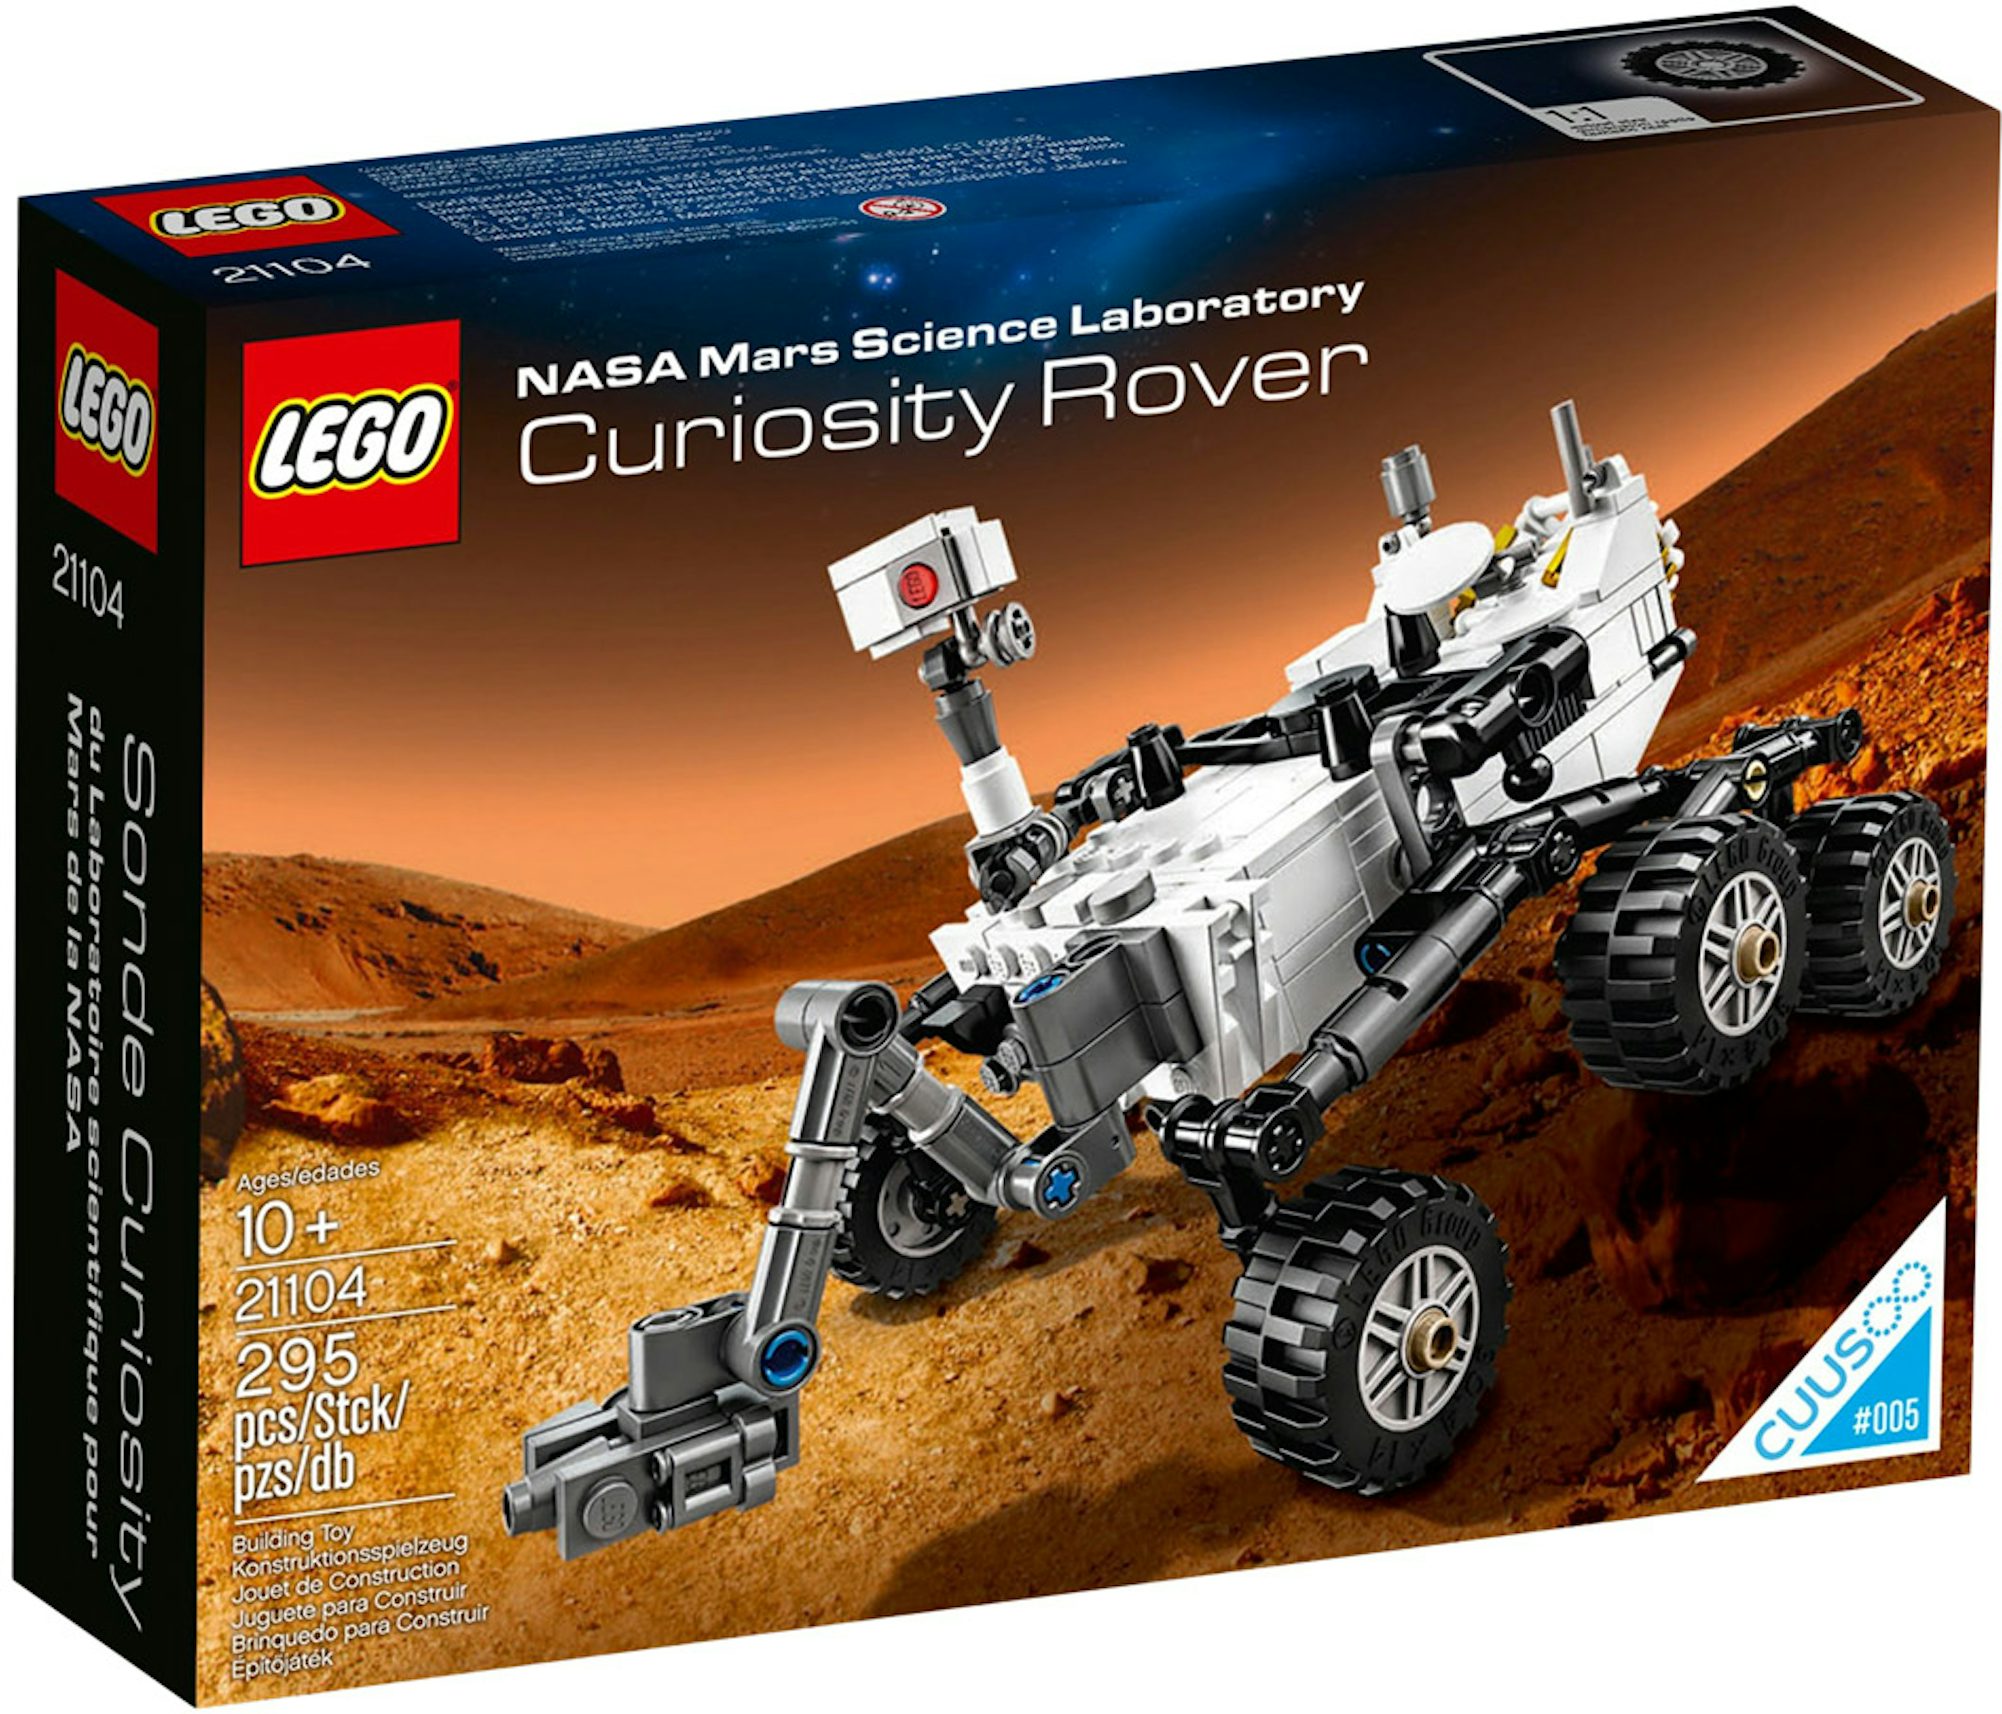 https://images.stockx.com/images/LEGO-Ideas-NASA-Mars-Science-Laboratory-Curiosity-Rover-Set-21104.jpg?fit=fill&bg=FFFFFF&w=1200&h=857&fm=jpg&auto=compress&dpr=2&trim=color&updated_at=1643051657&q=60